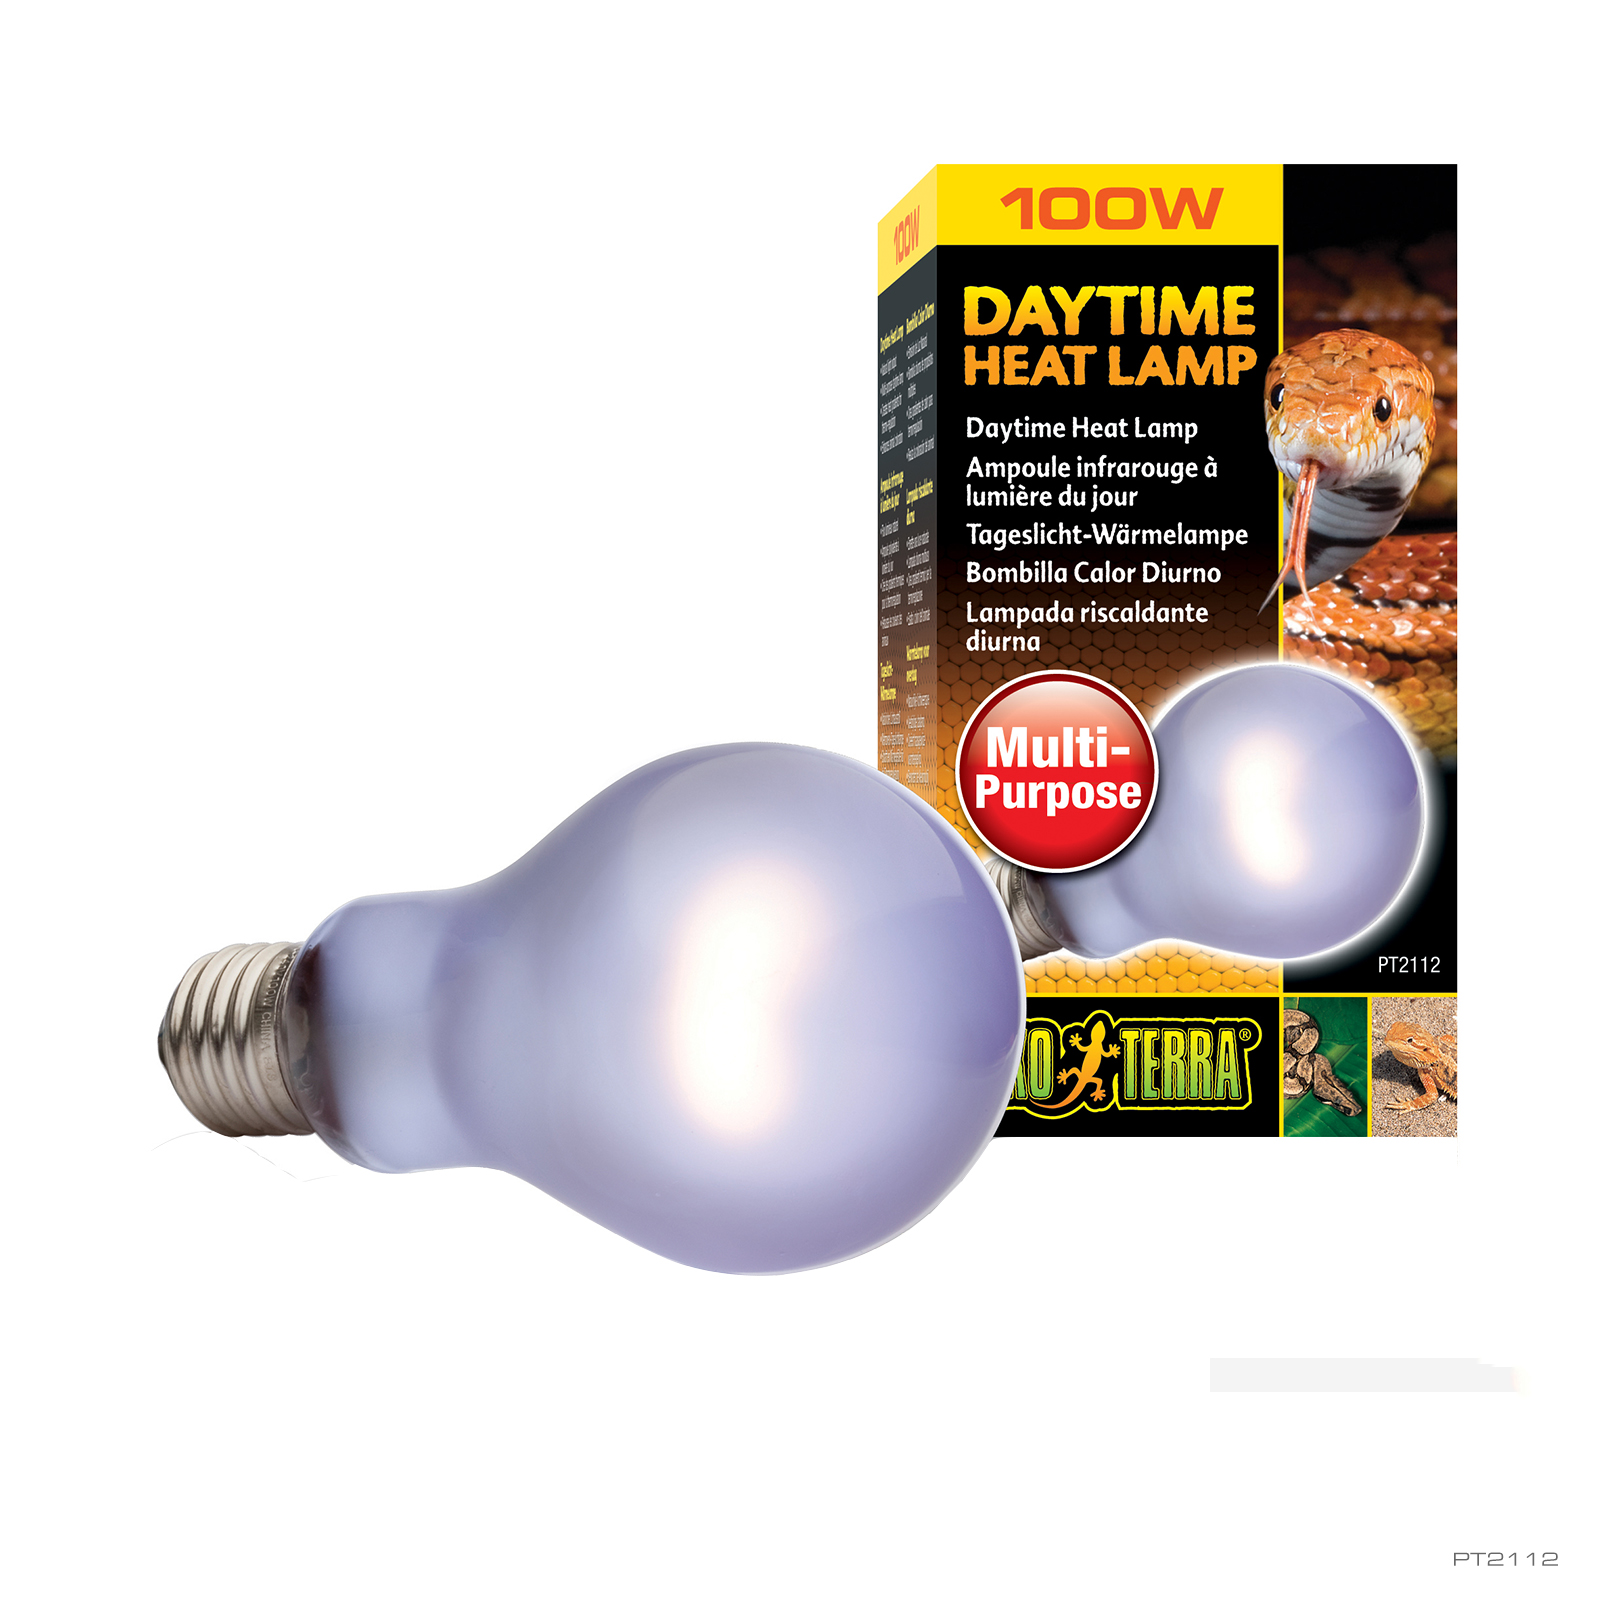 Daytime Heat Lamp 100W A21